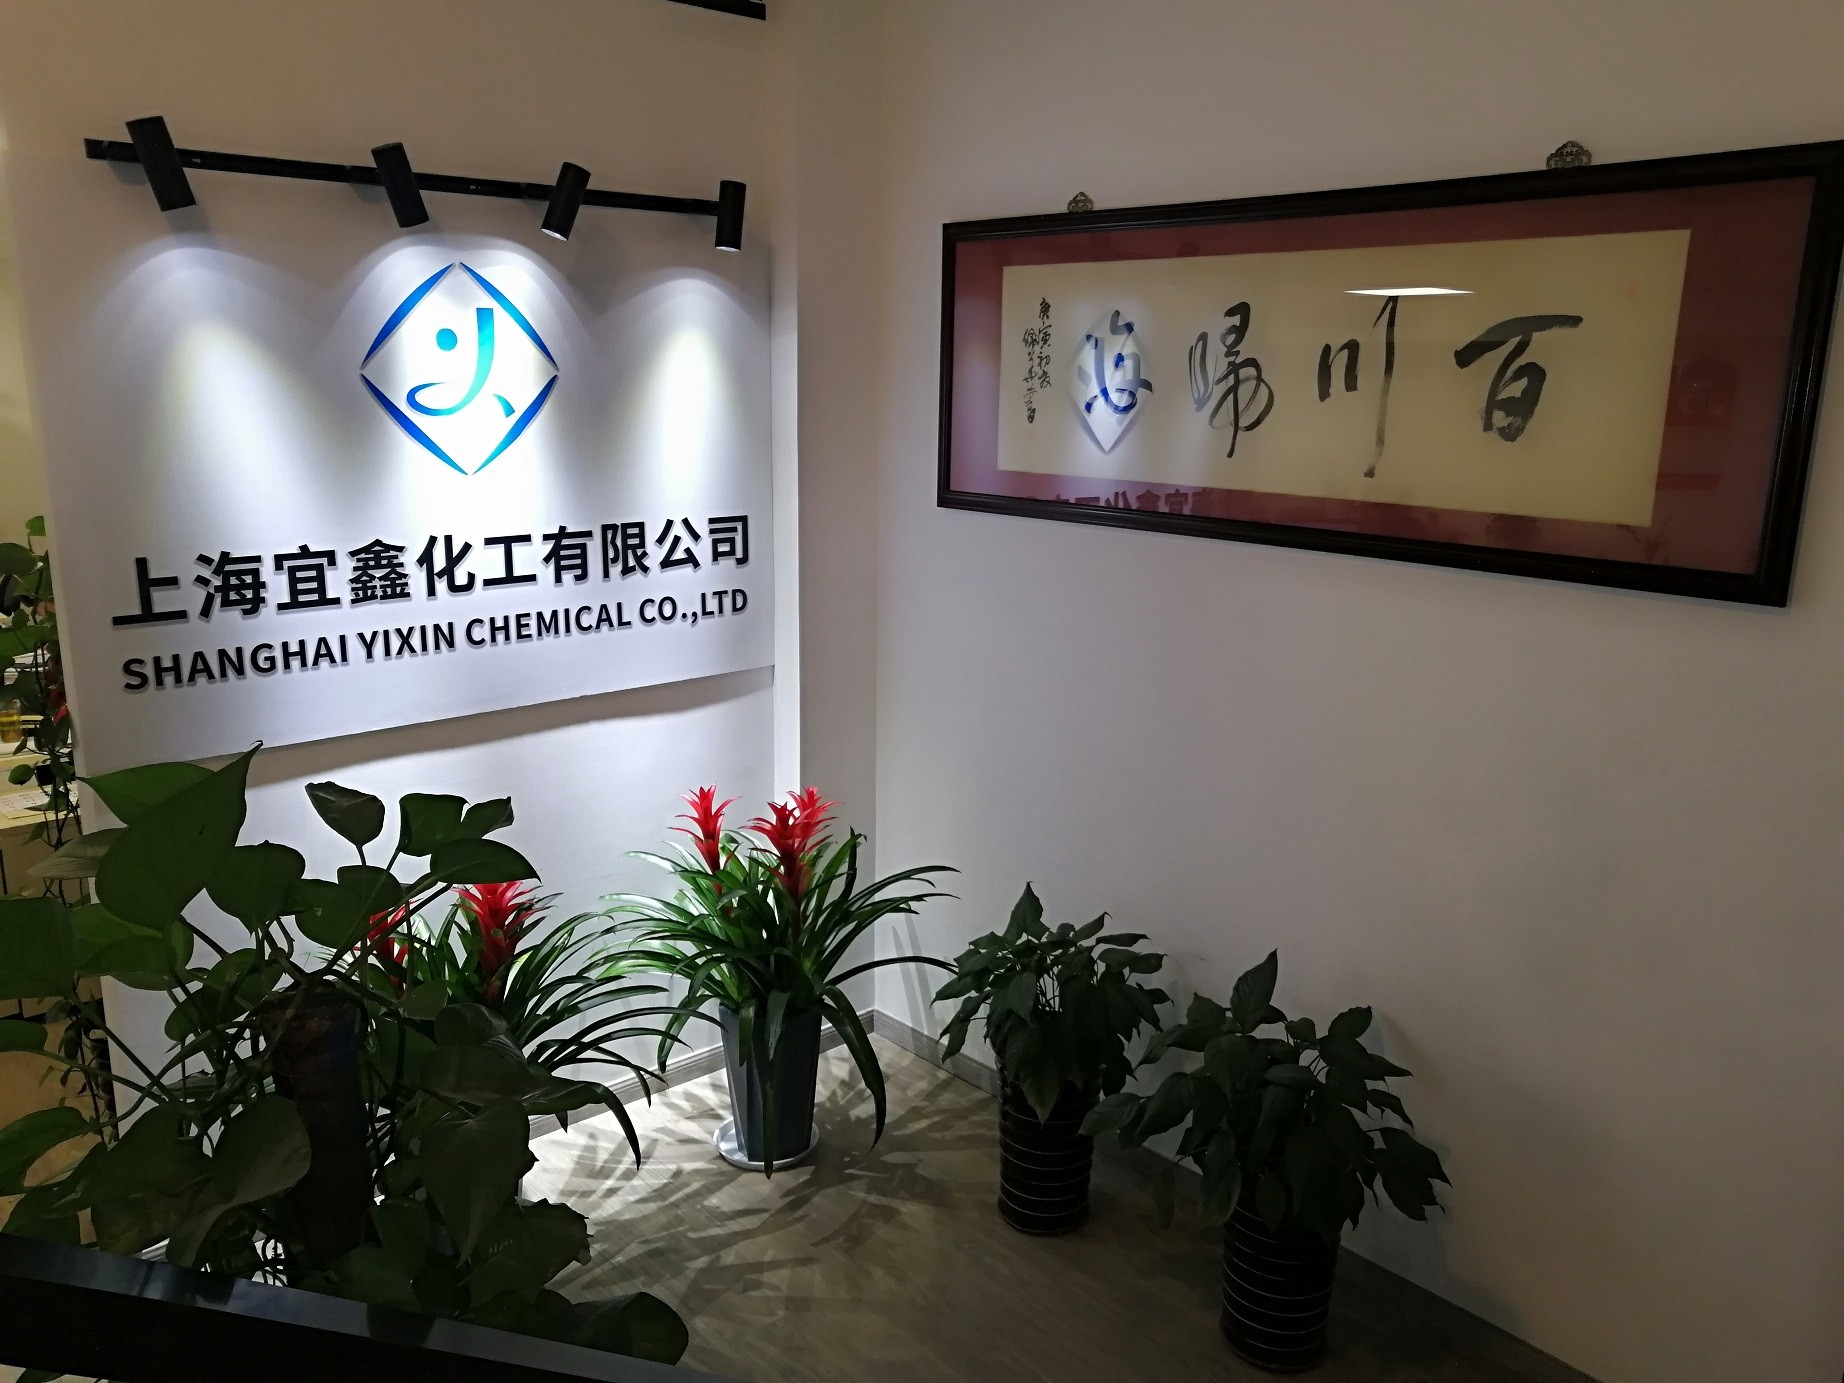 Chine Shanghai Yixin Chemical Co., Ltd.